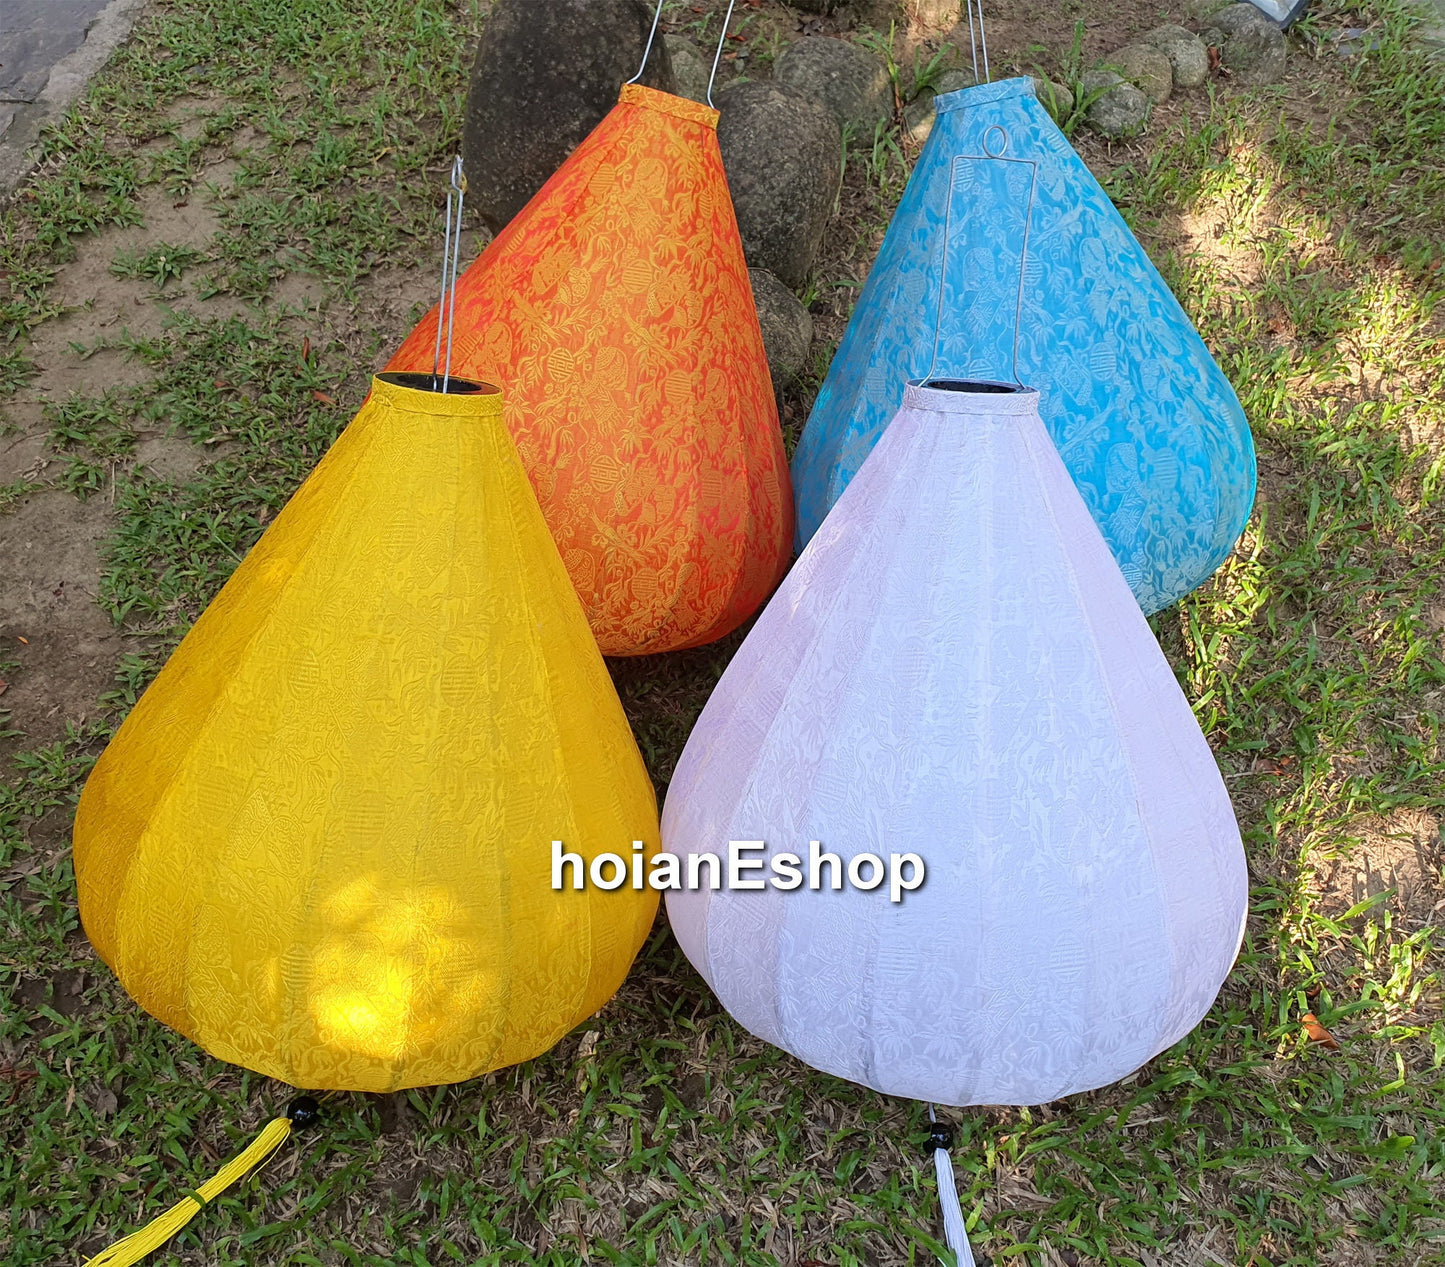 2 Pcs Large Lanterns For Wedding Party Decorative Big Lanterns For Festival Events Decor Wedding Tent Dcor 90cm